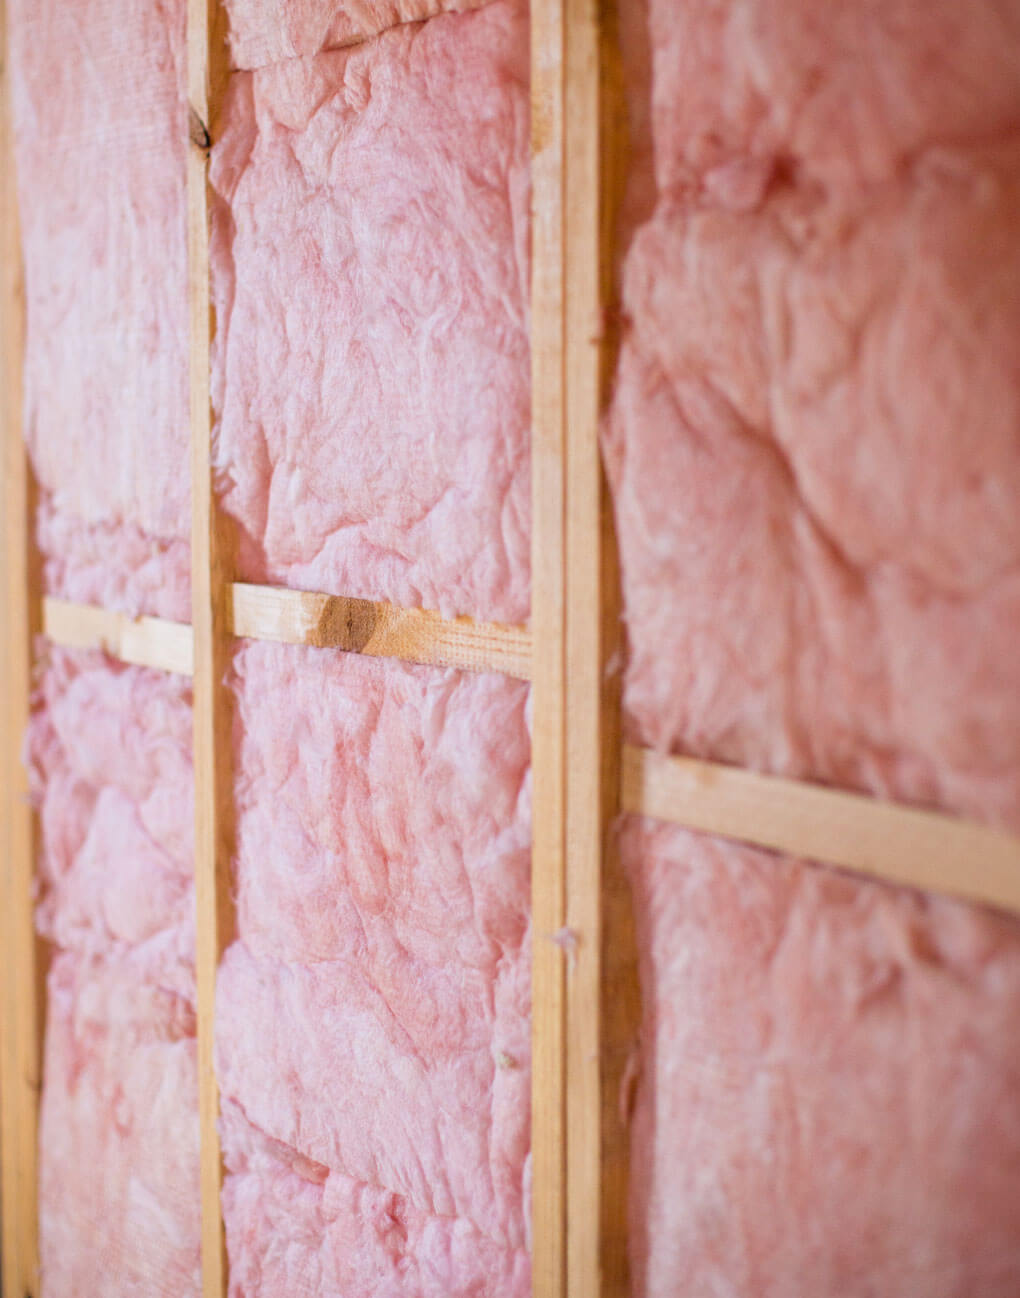 Wall insulation batts